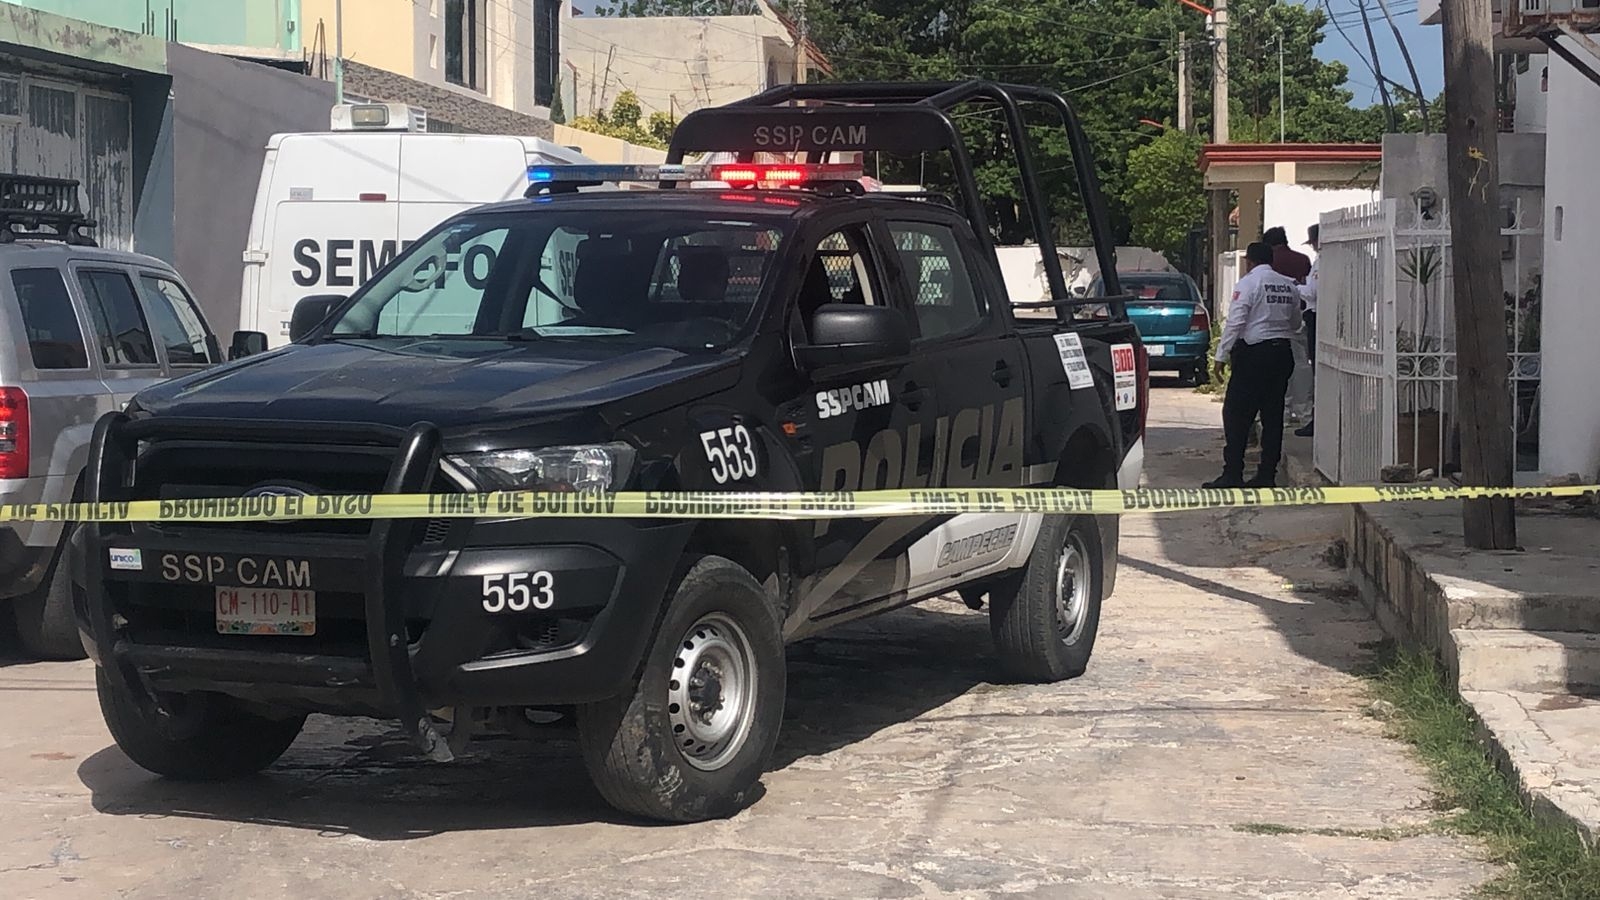 Morenista de Campeche denuncia un intento de ataque armado